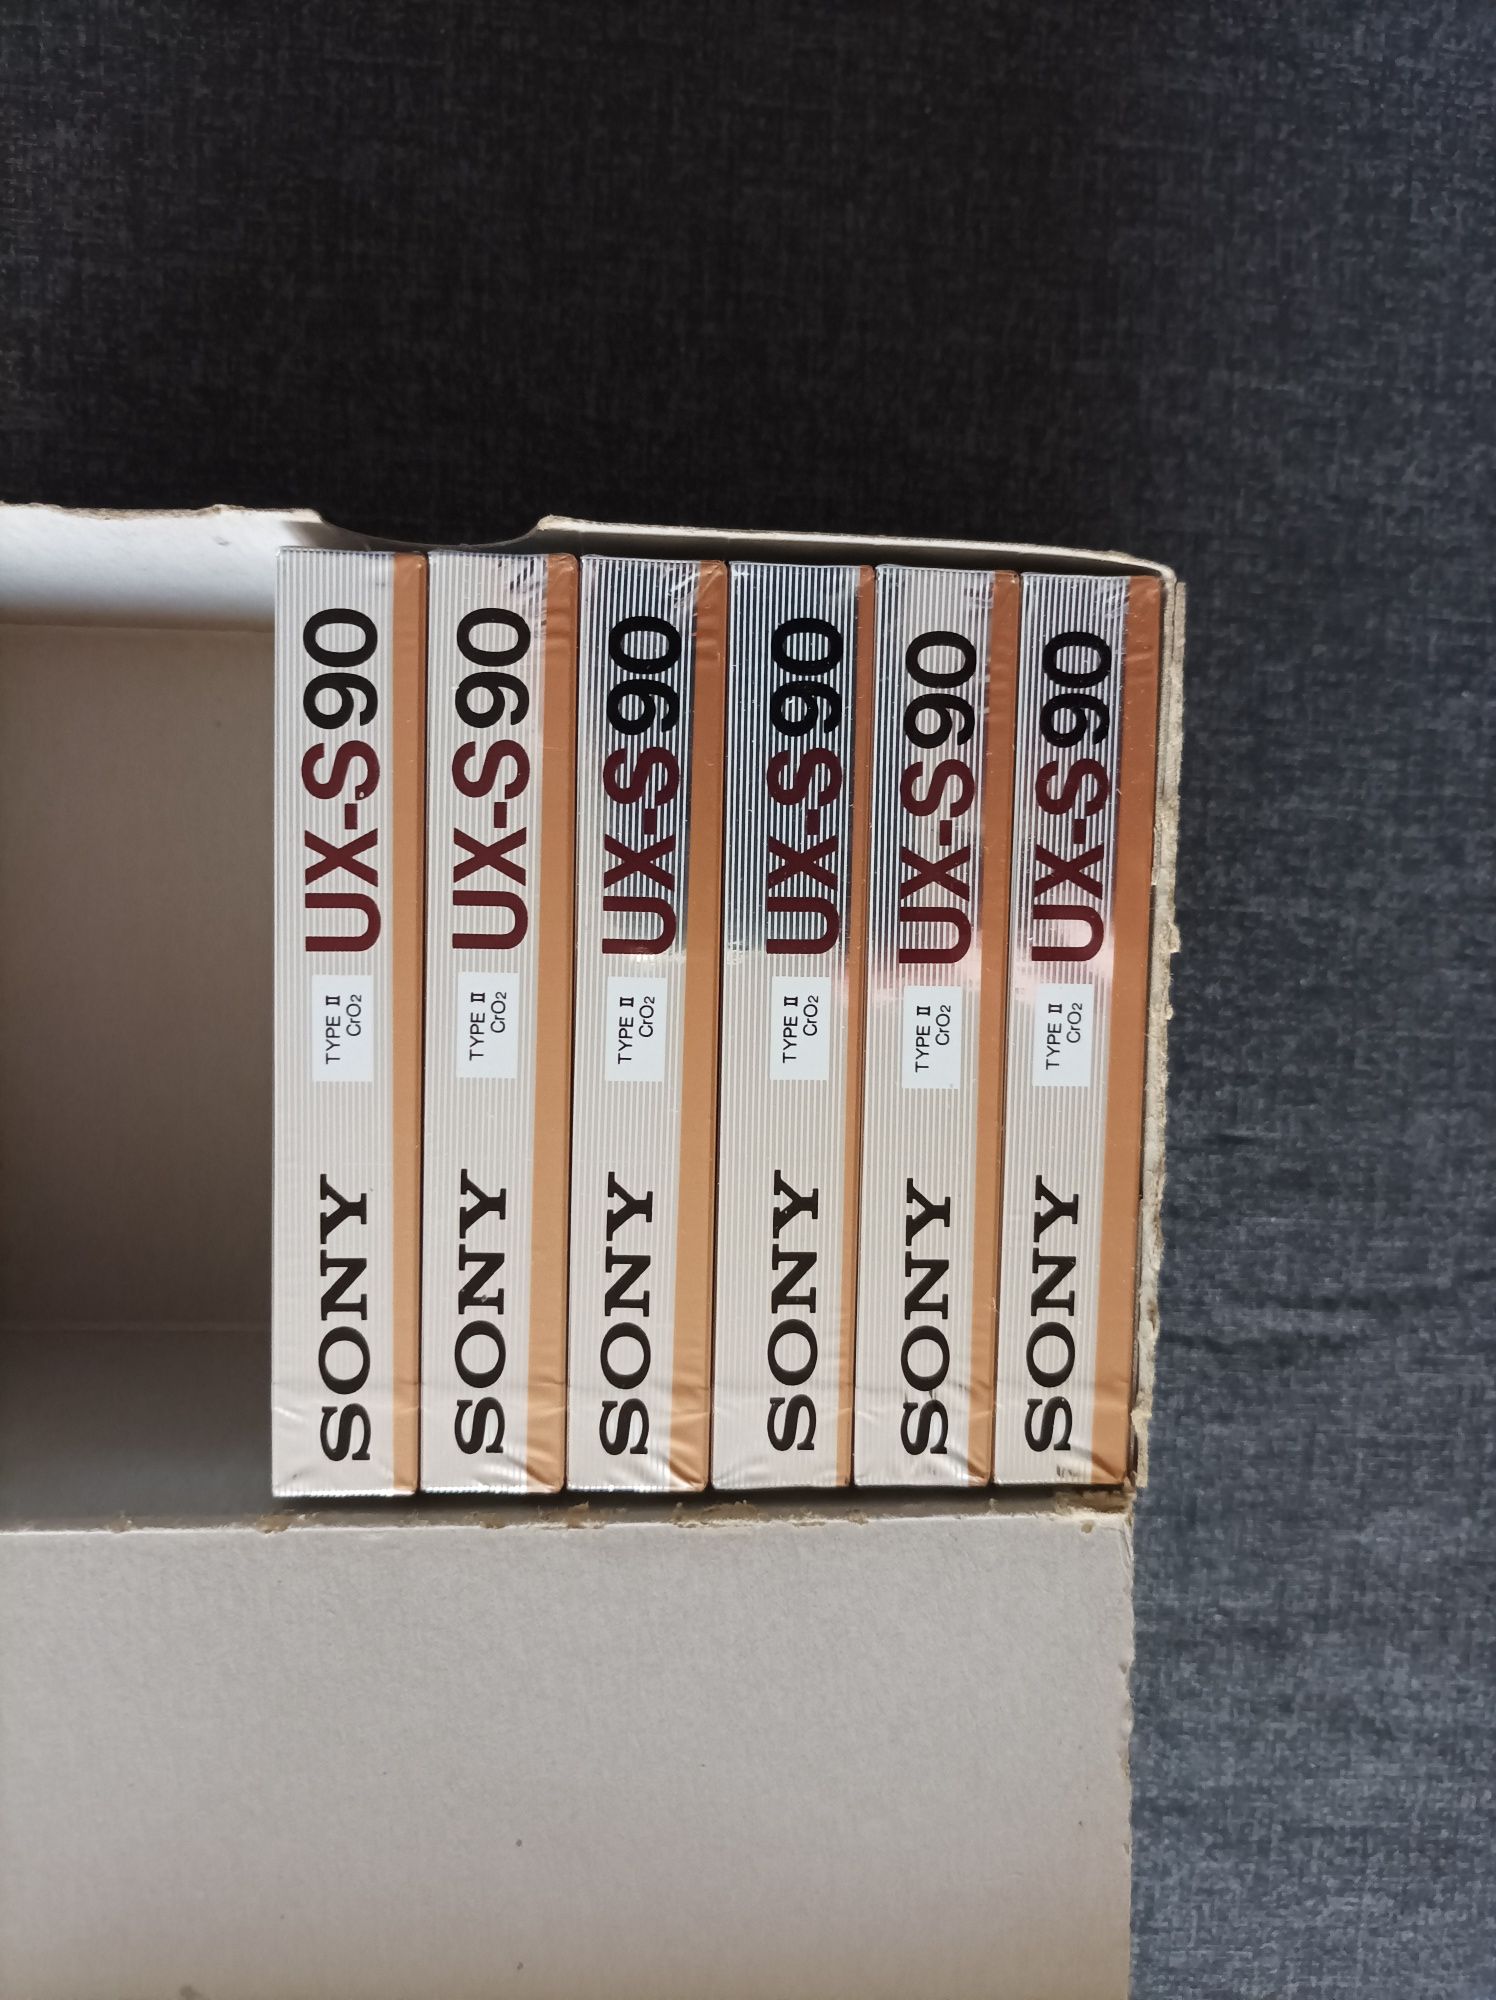 Kaseta SONY UX - S 90 Chrom CrO2 ,1986 rok, cena za 1 kasetę